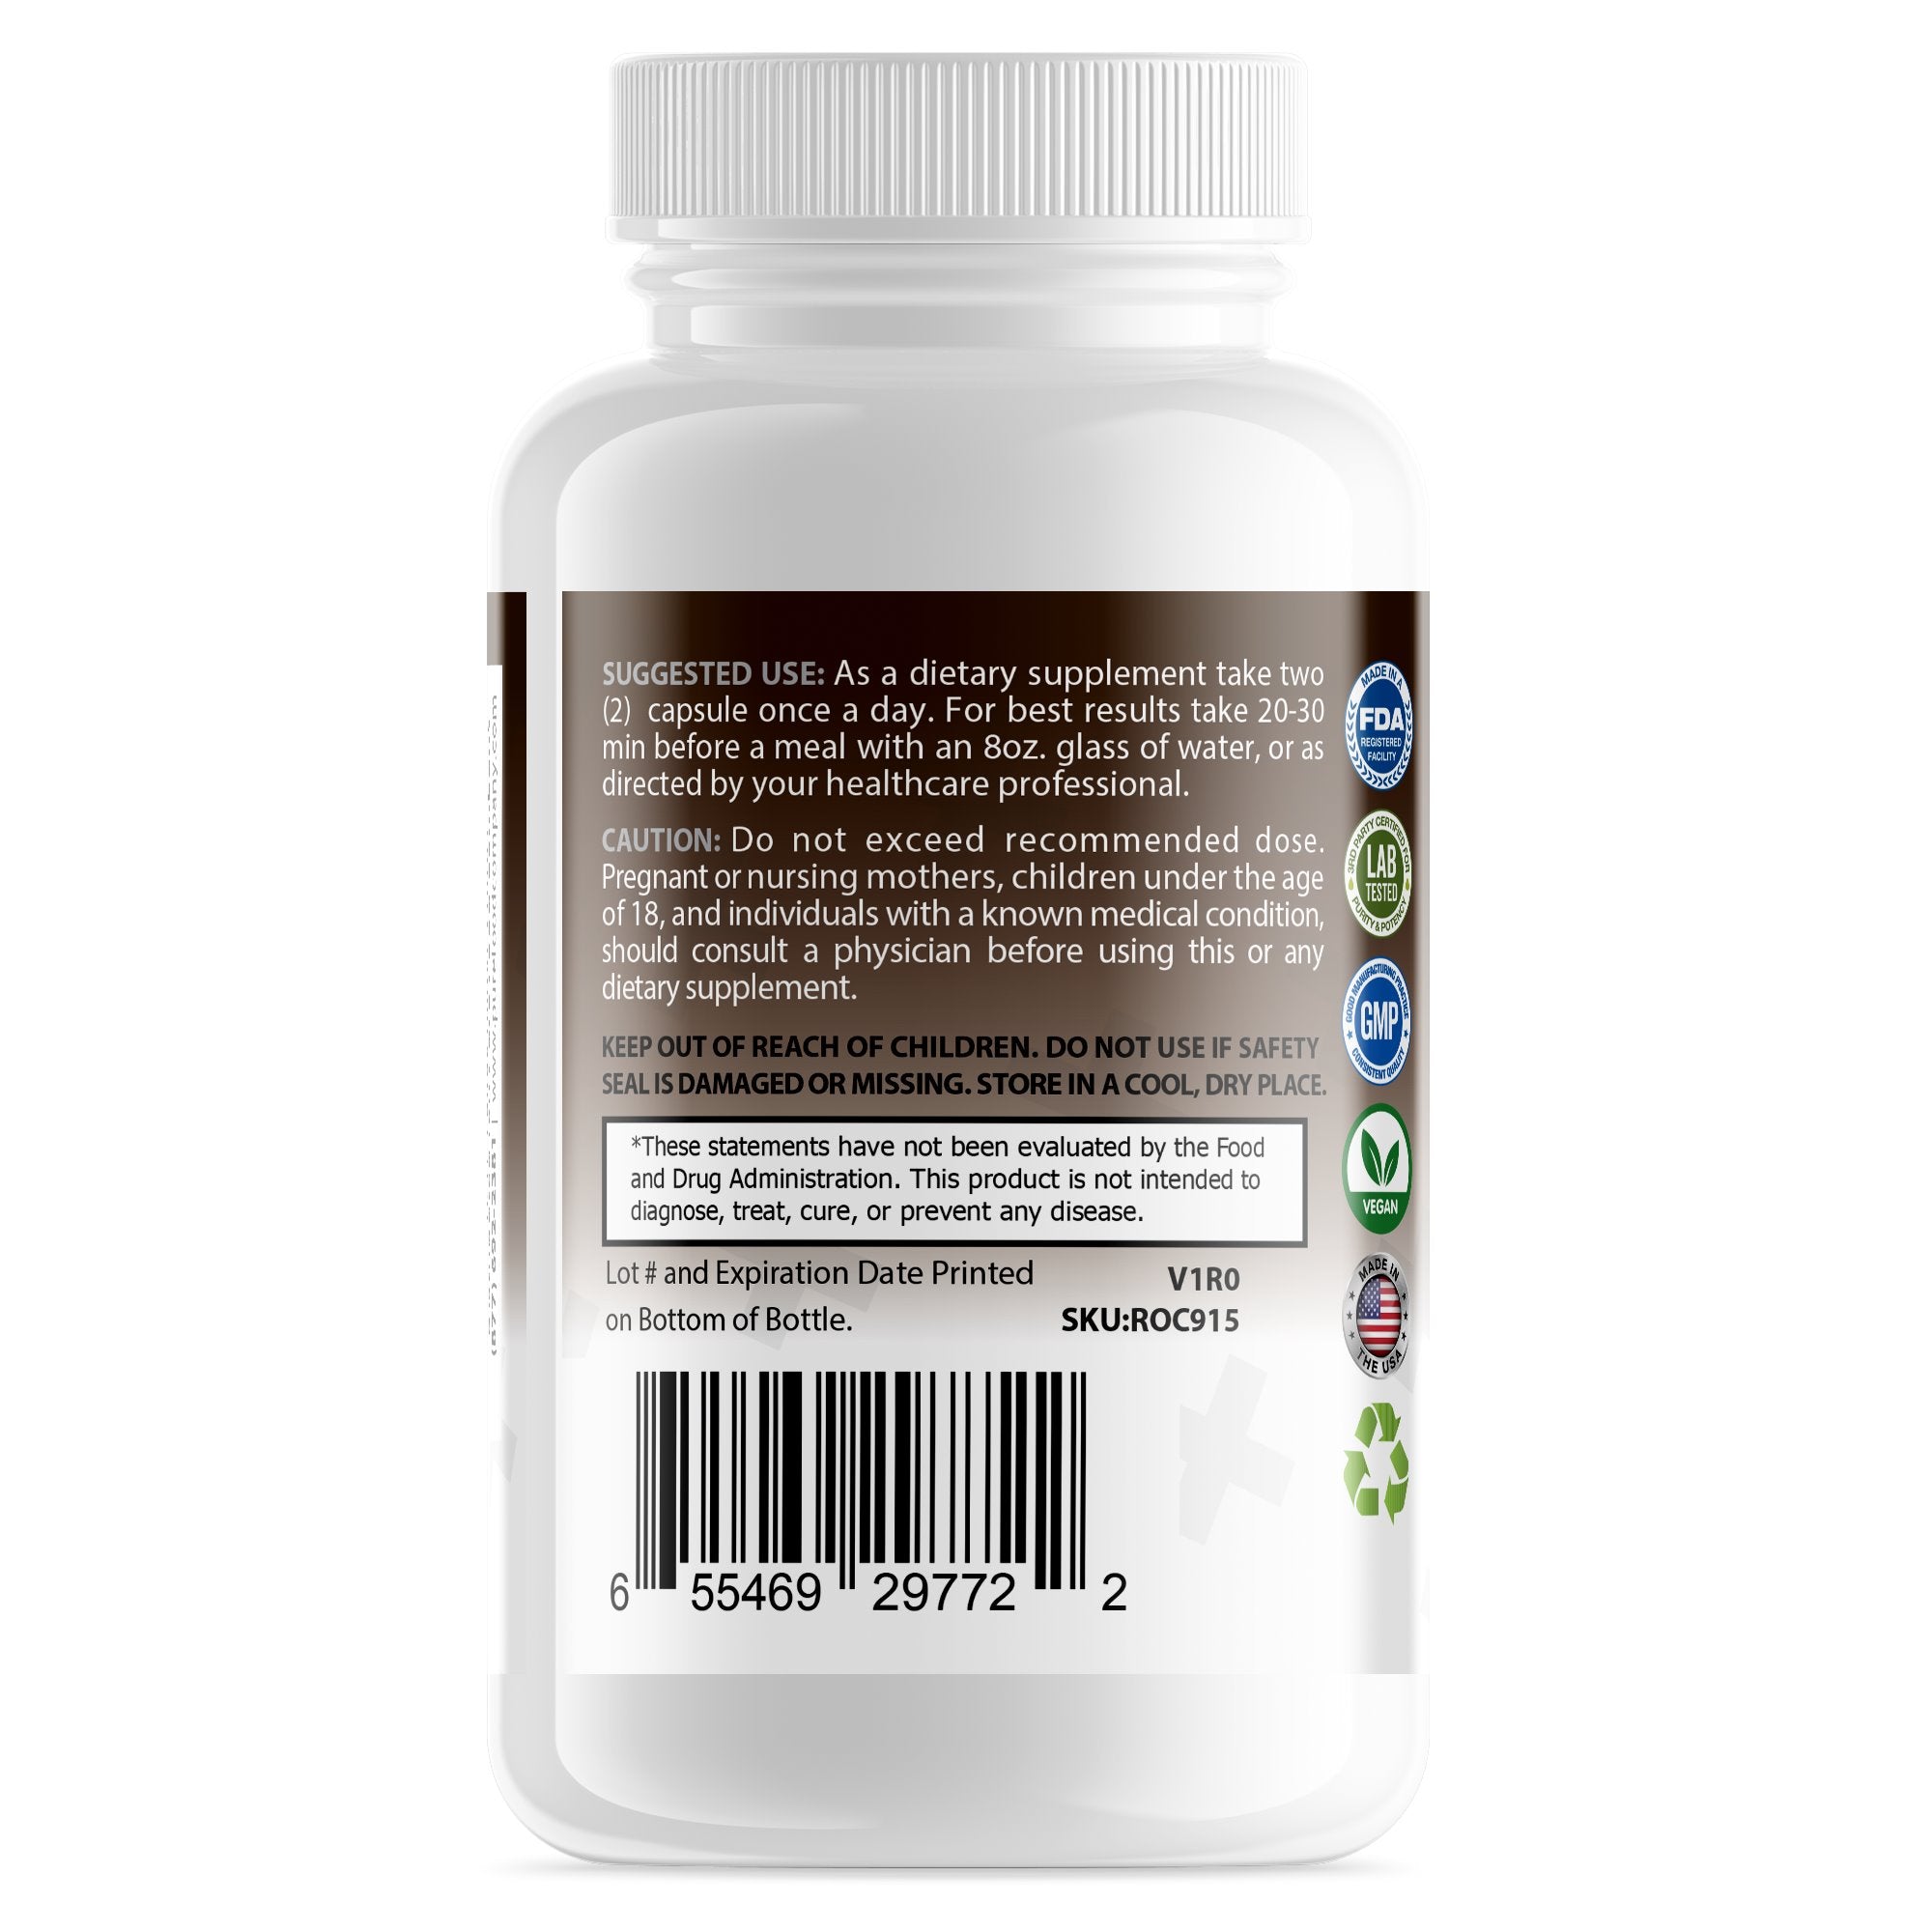 Pure Food SHROOMS Adaptogenic Mushroom Blend - 60 Capsules Unflavored Pure Food Digestive Health 